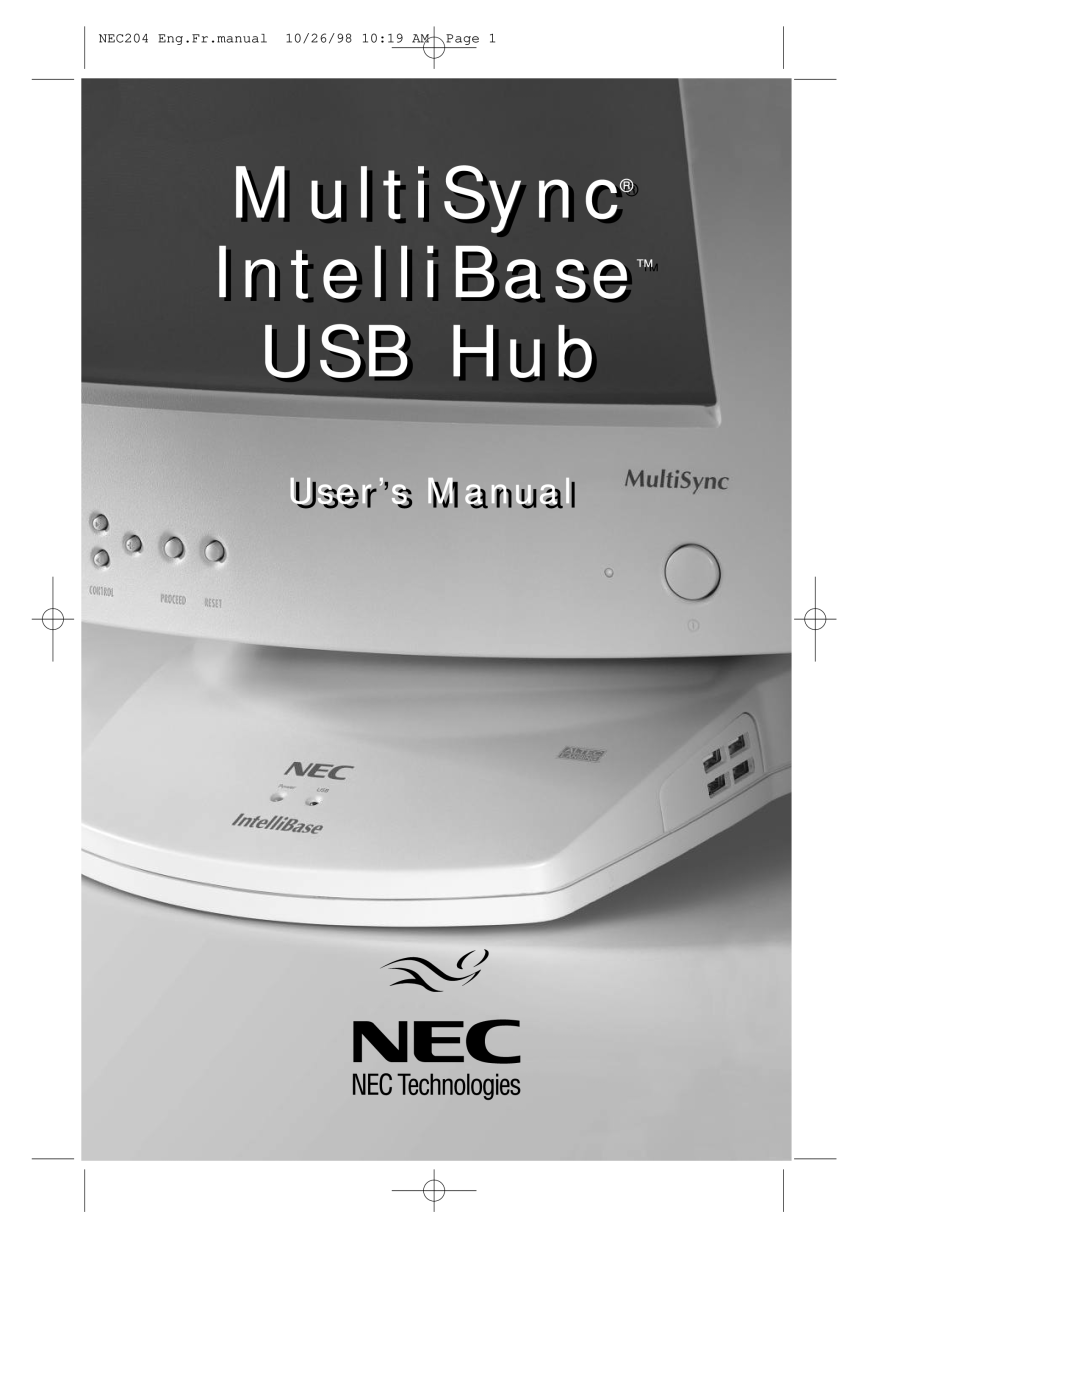 NEC A3844 user manual MultiSync, IntelliBase, USB Hub, User’s r’ss Manuall, NEC204 Eng.Fr.manual 10/26/98 10:19 AM Page 